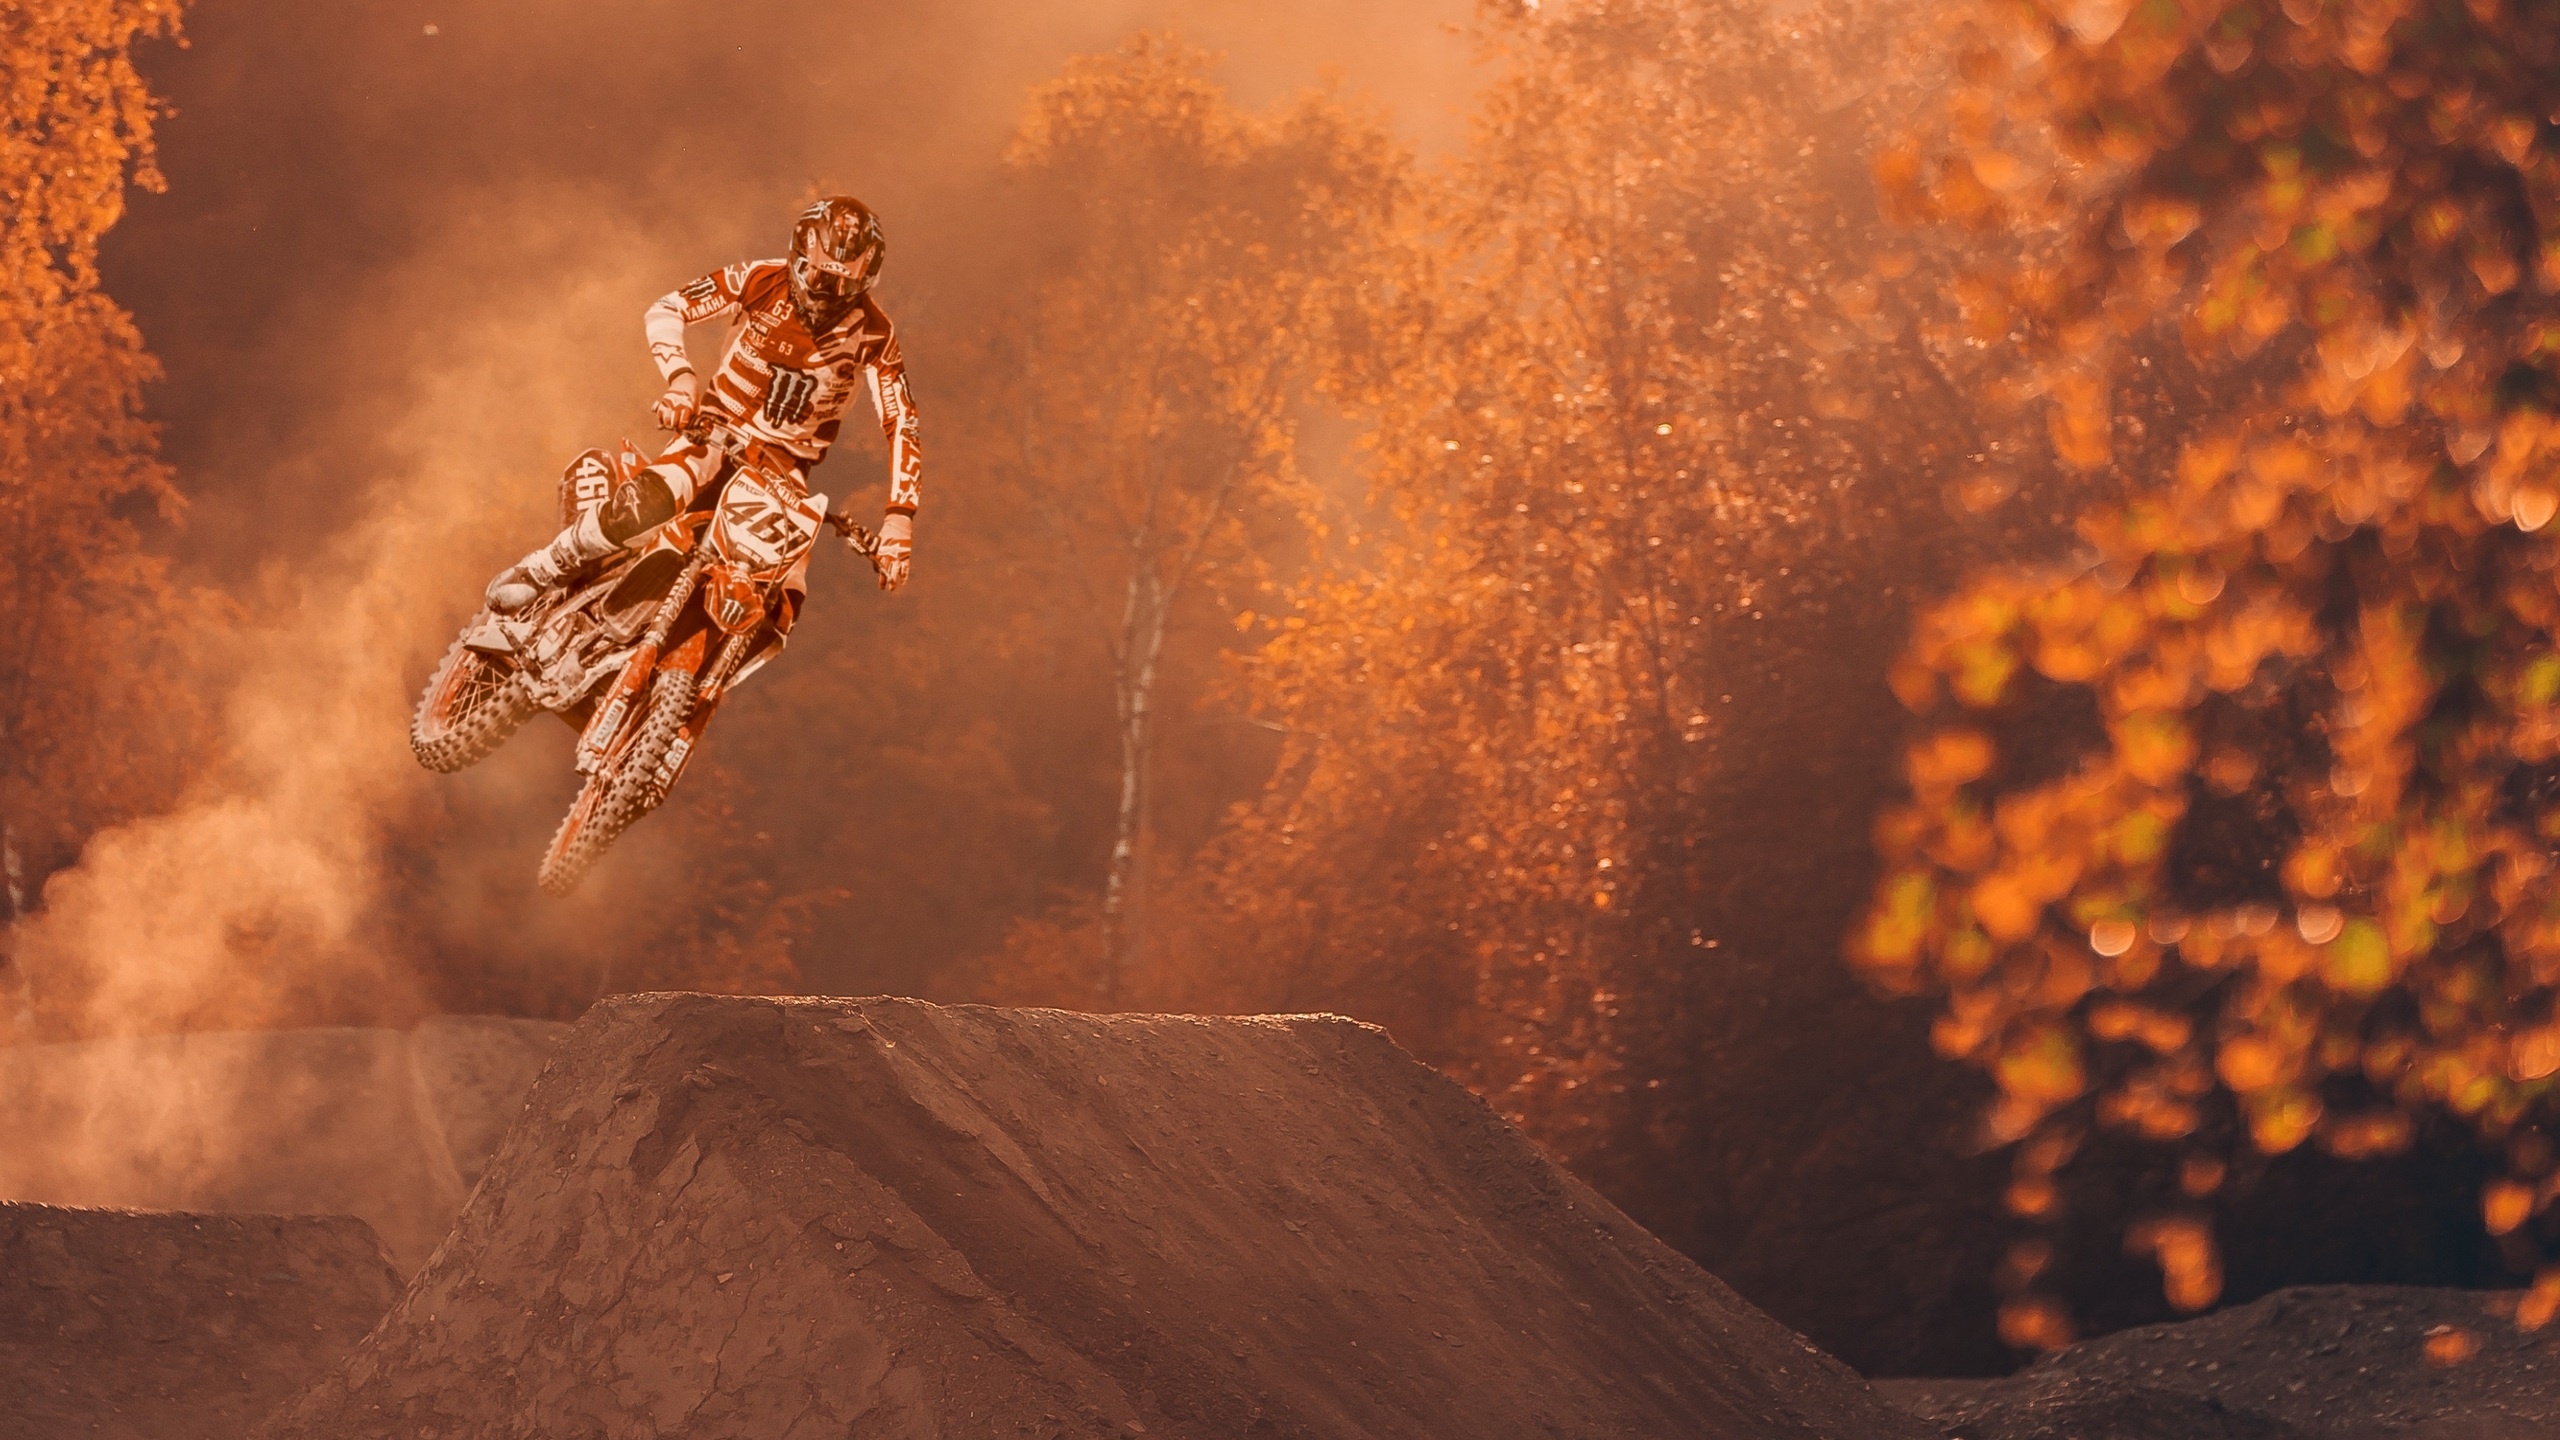 Dirt Bike, Extreme sports, Motorcycle stunts, Vibrant 1440p resolution, 2560x1440 HD Desktop